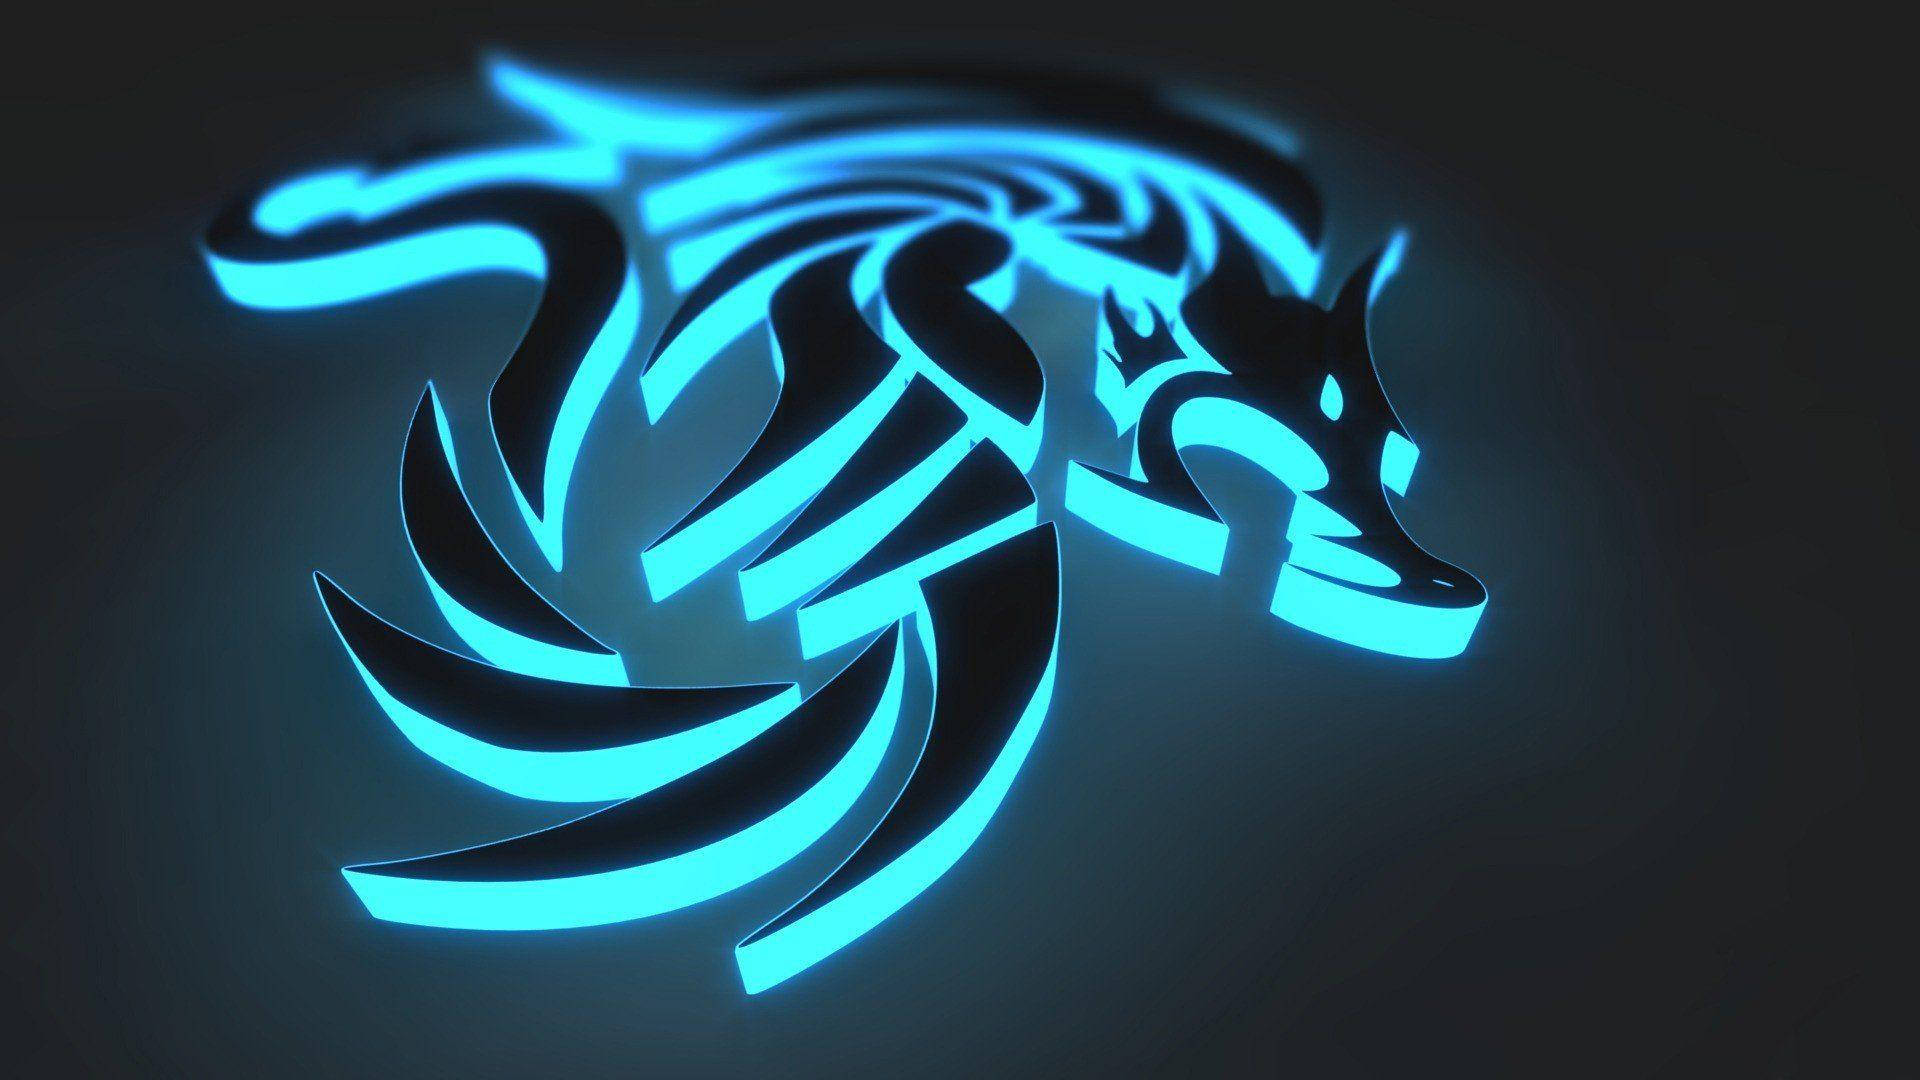 Cool Logos 3d Dragon Background